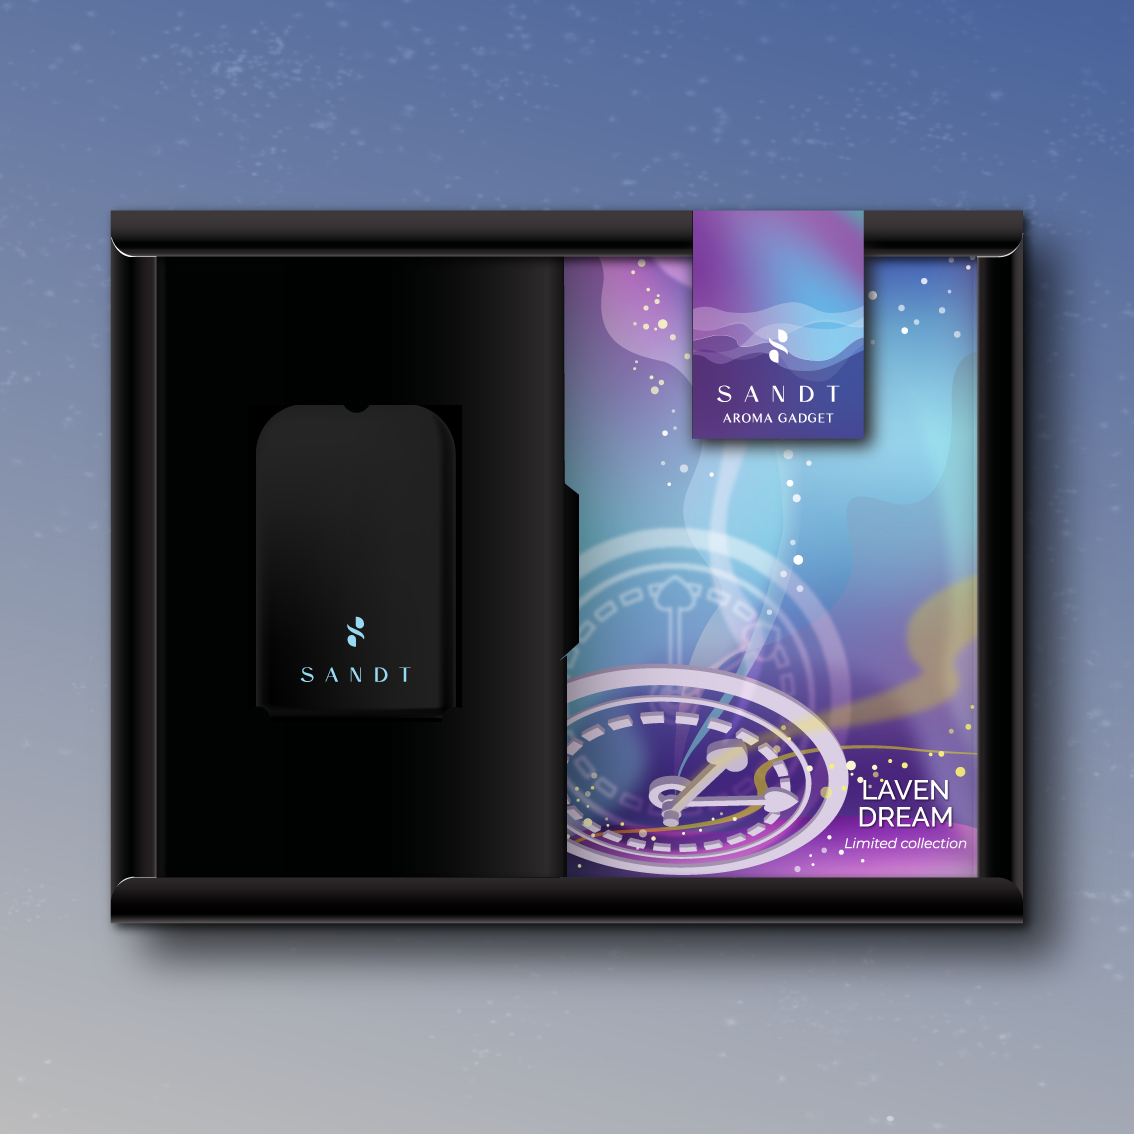 [Special Edition] SANDT Aroma Gadget ยาดมสไตล์แกดเจ็ต กลิ่นลาเวนดรีม (Lavendream)